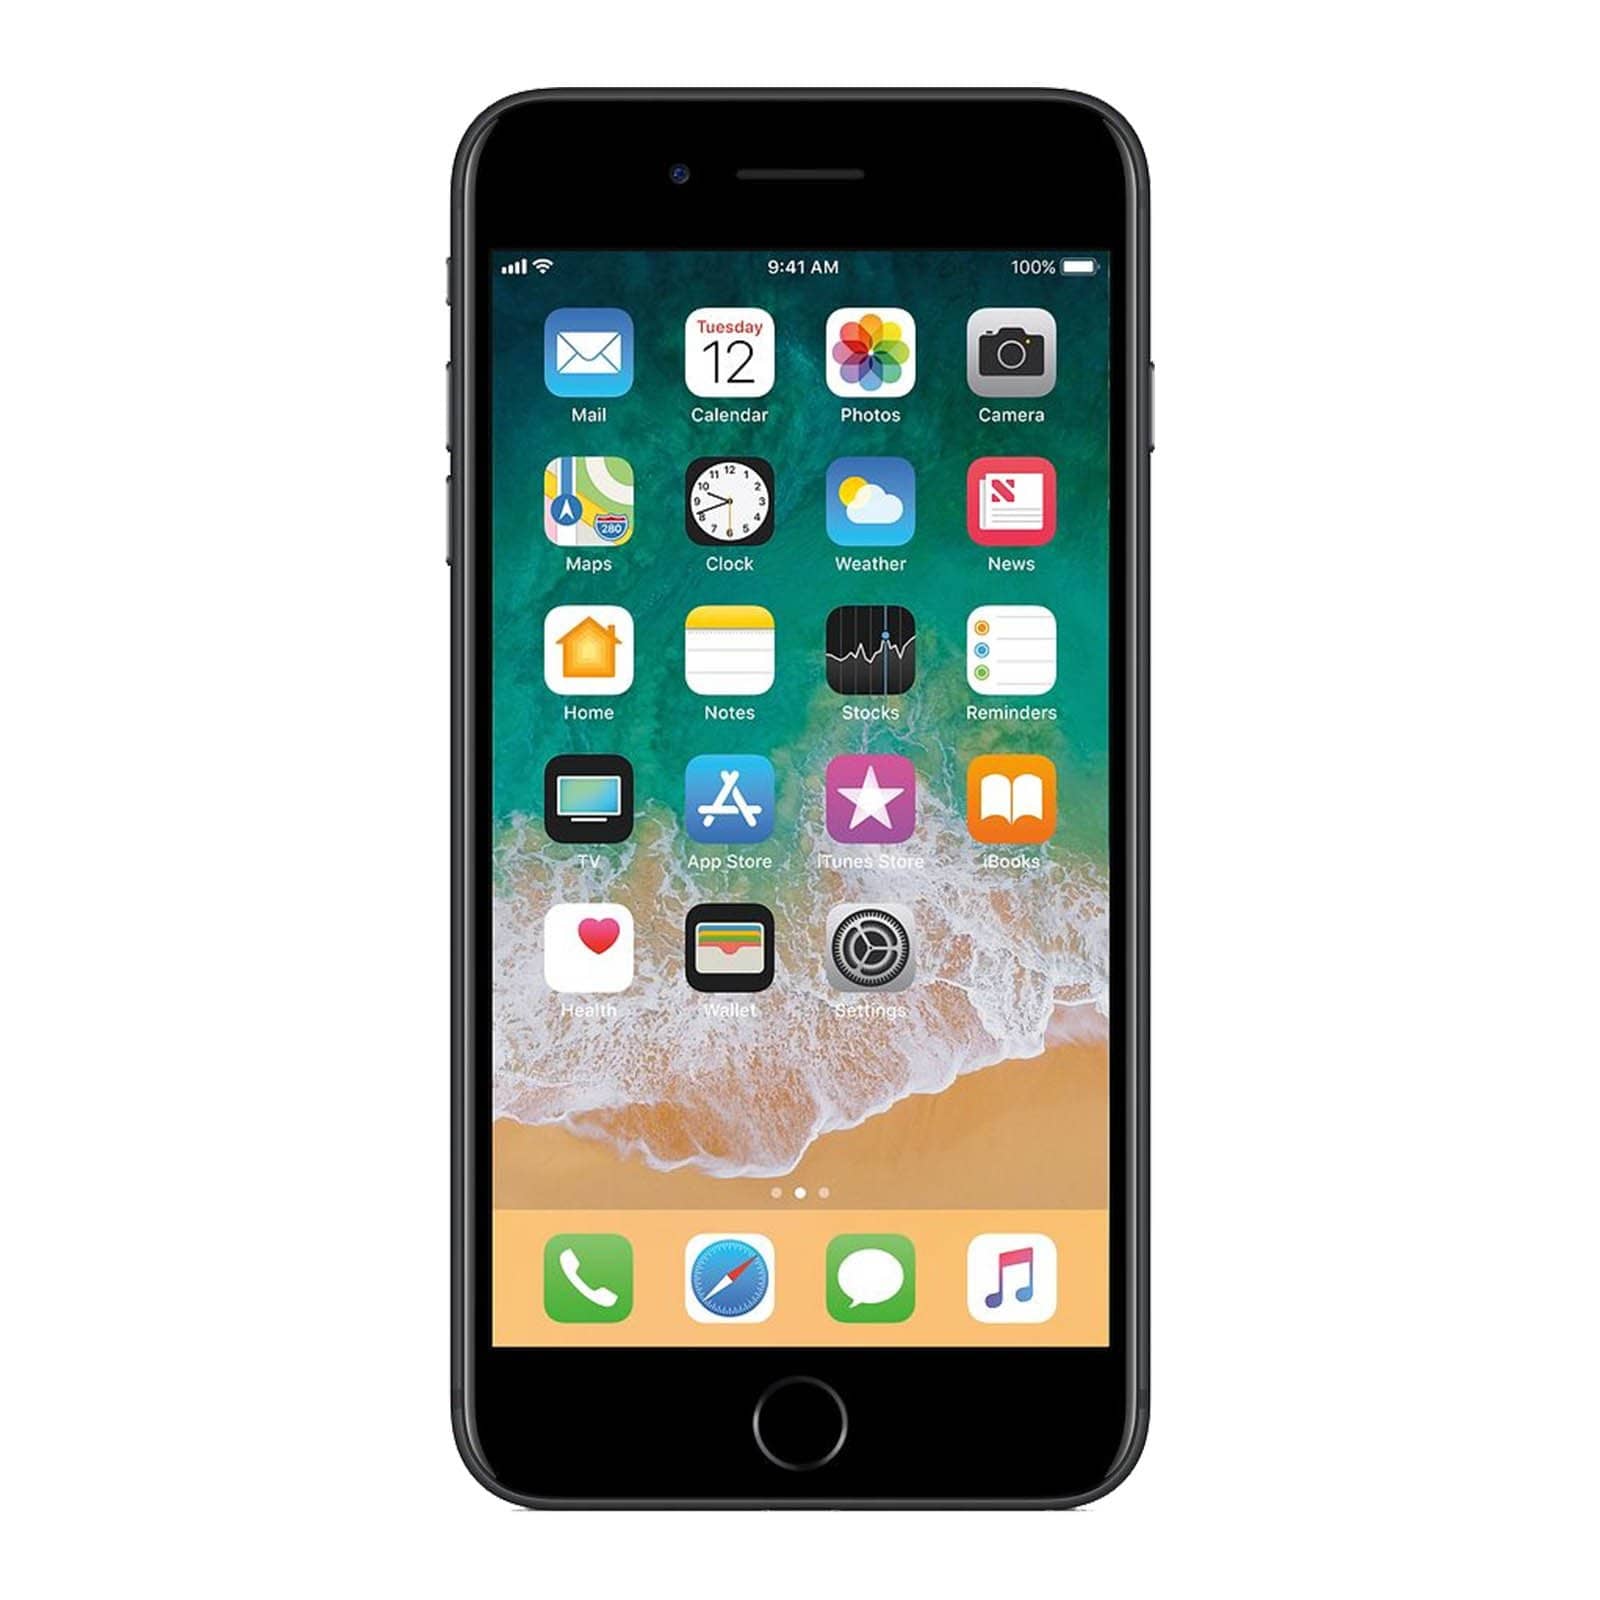 Apple iPhone 7 Plus 32GB Black Very Good - Unlocked